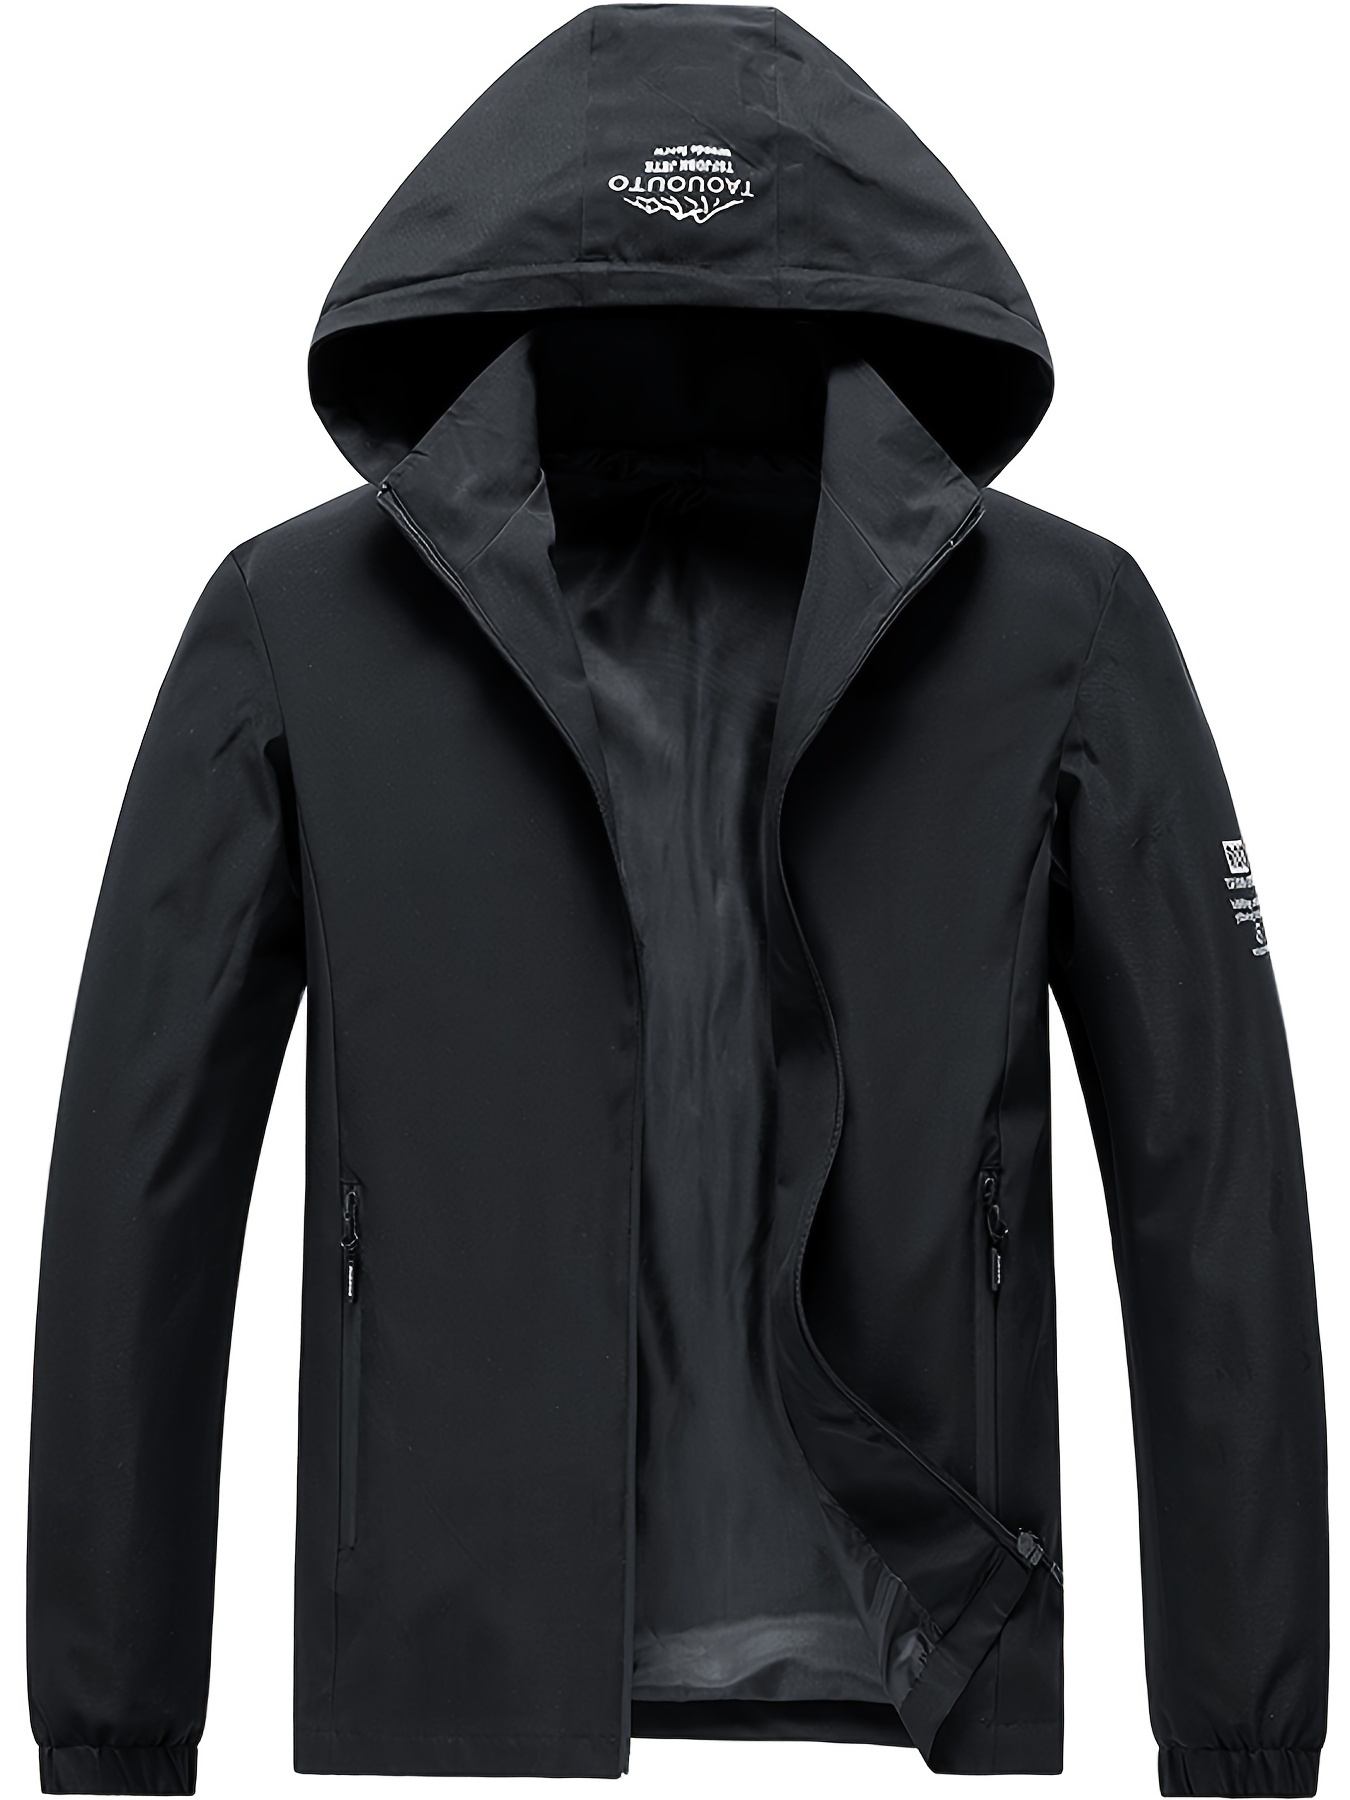  Mens Lightweight Rain Shell Waterproof Rain Coat Packable Rain  Jacket For Hiking Golf Travel Camo